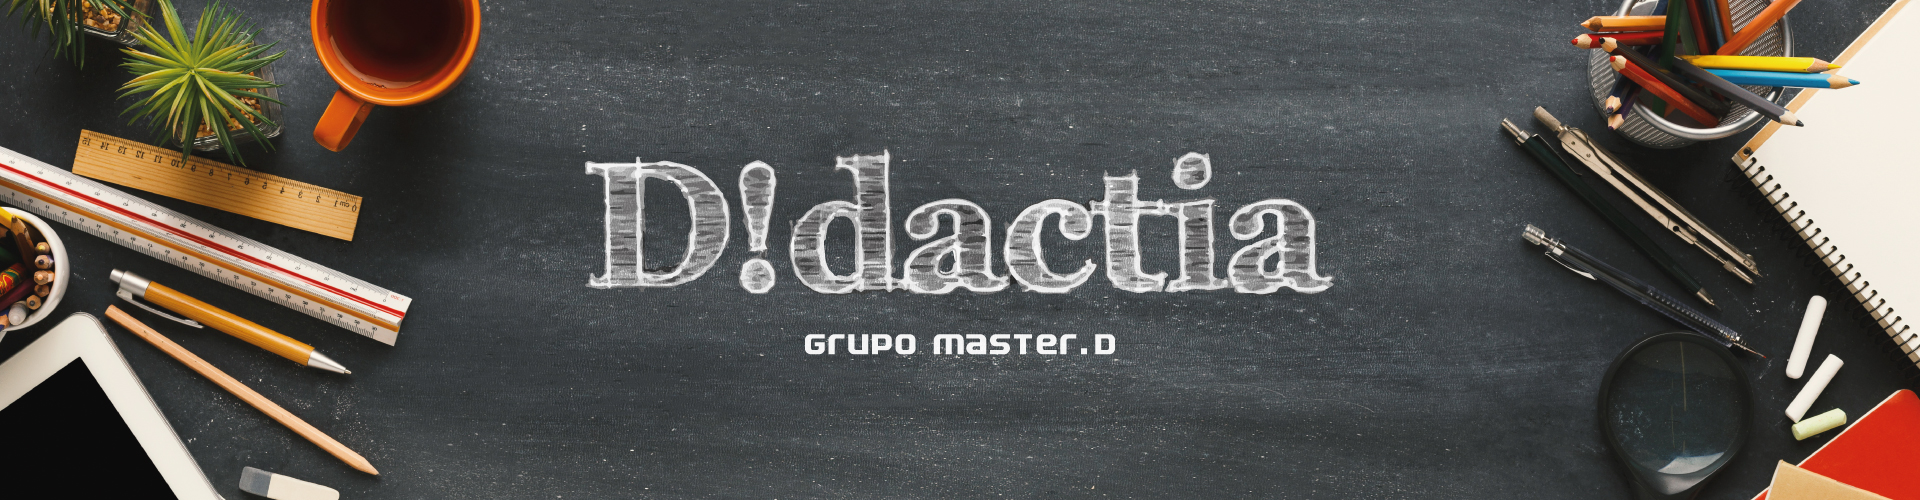 Didactia Grupo MasterD